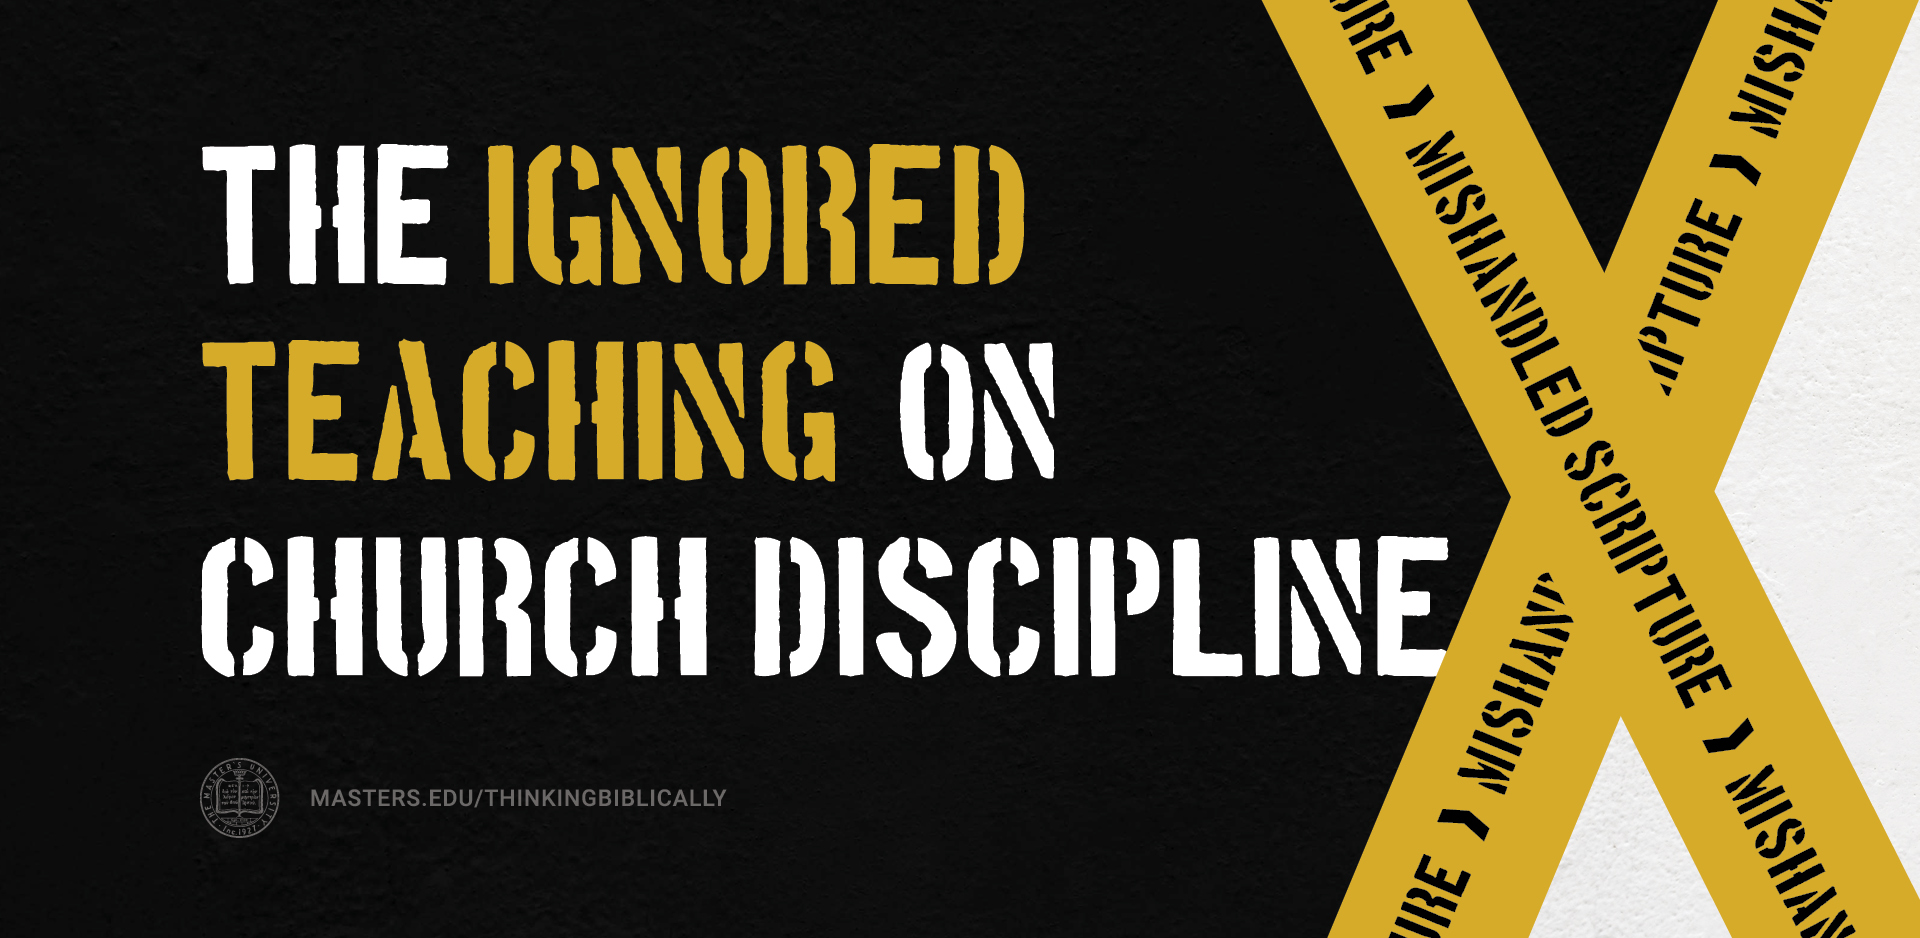 The Ignored Teaching on Church Discipline